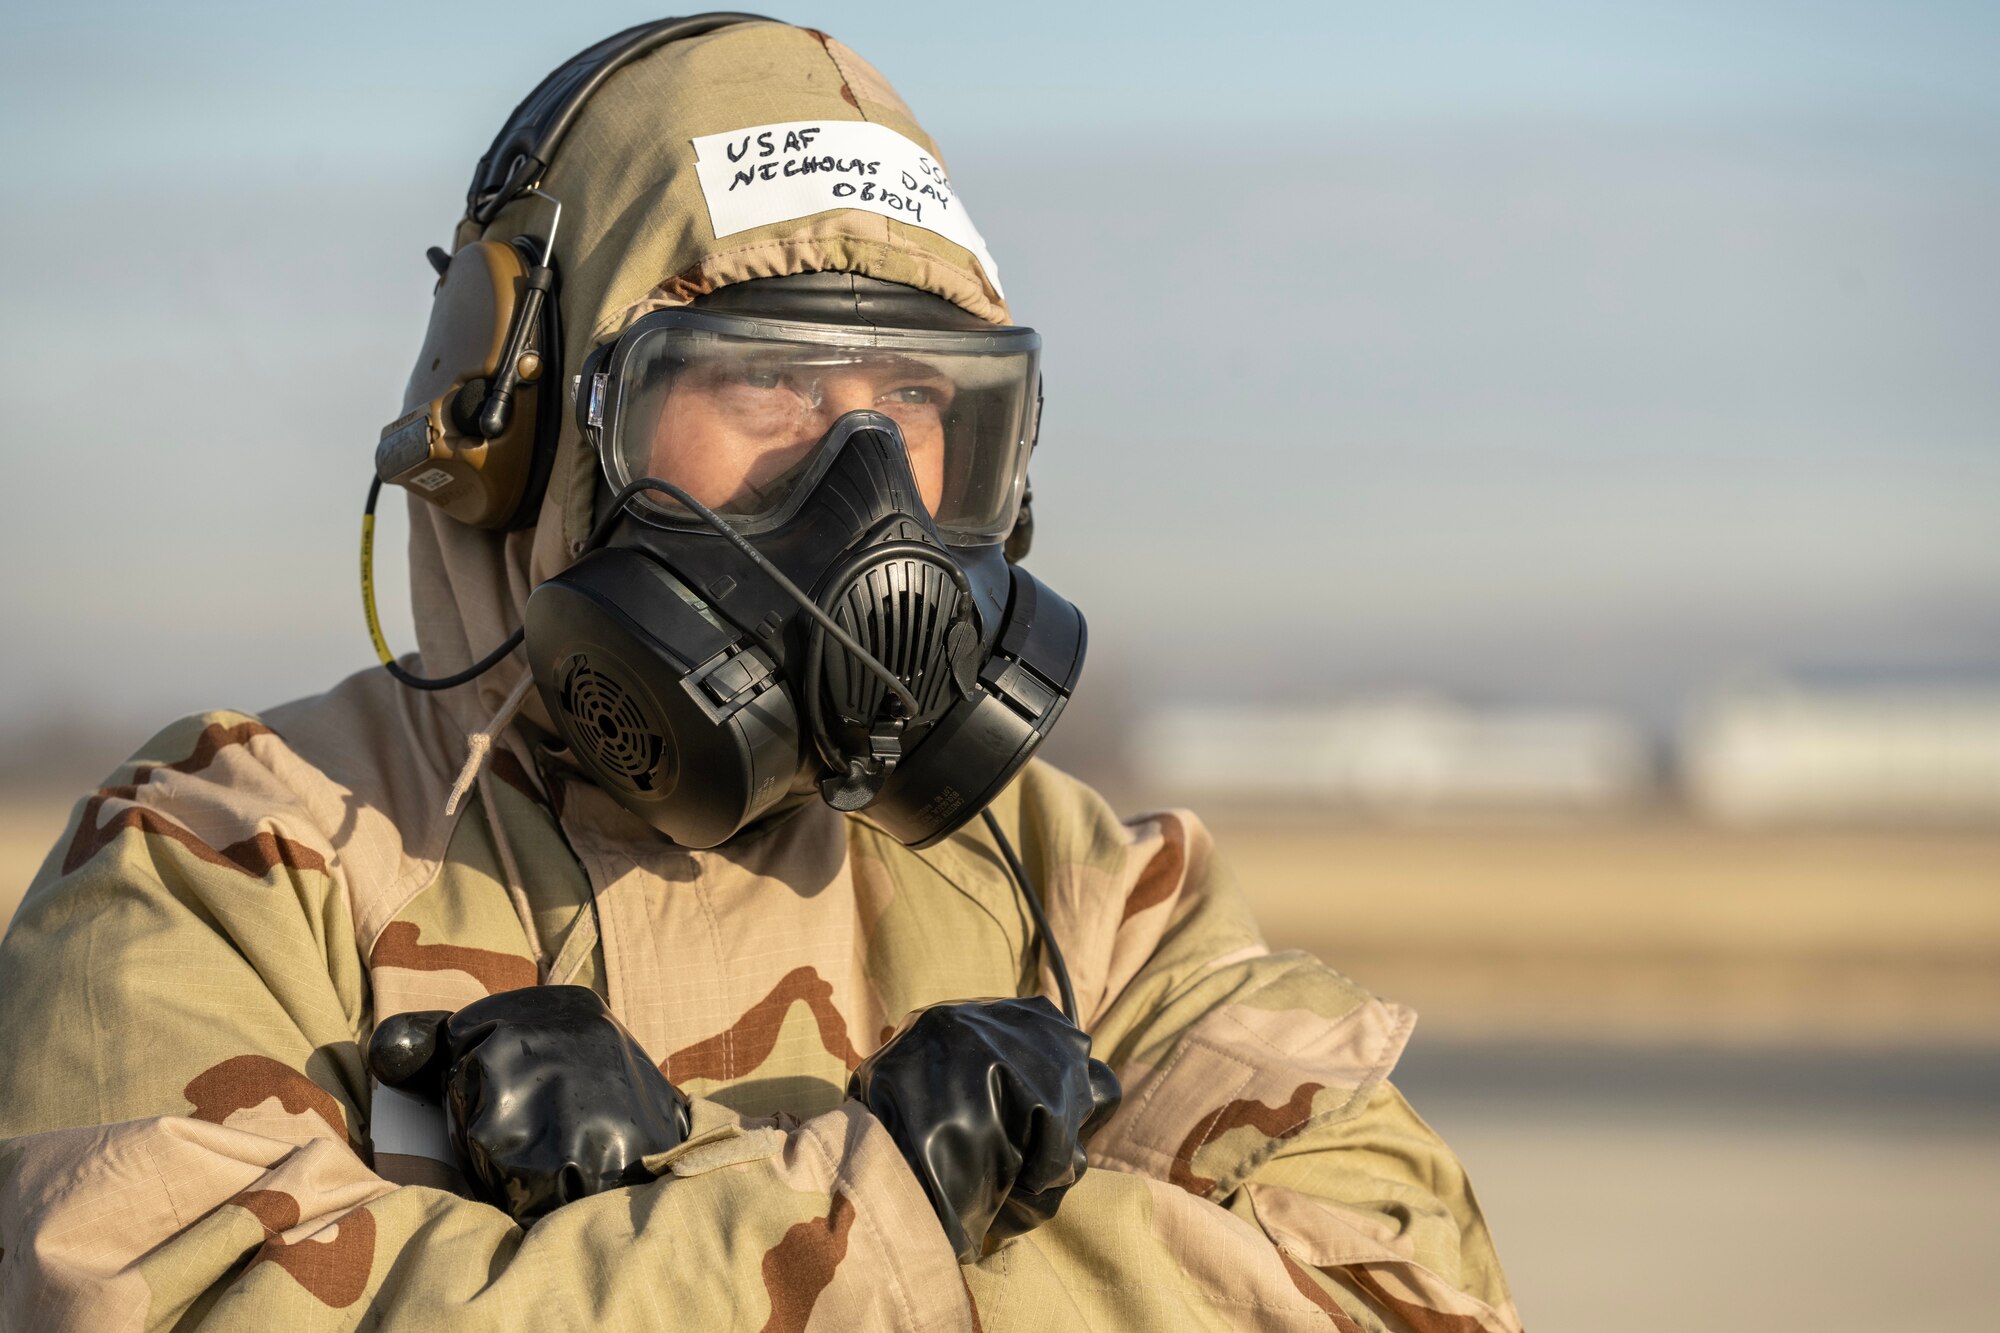 An Airman wears a chemical warfare suite while launching an aircraft